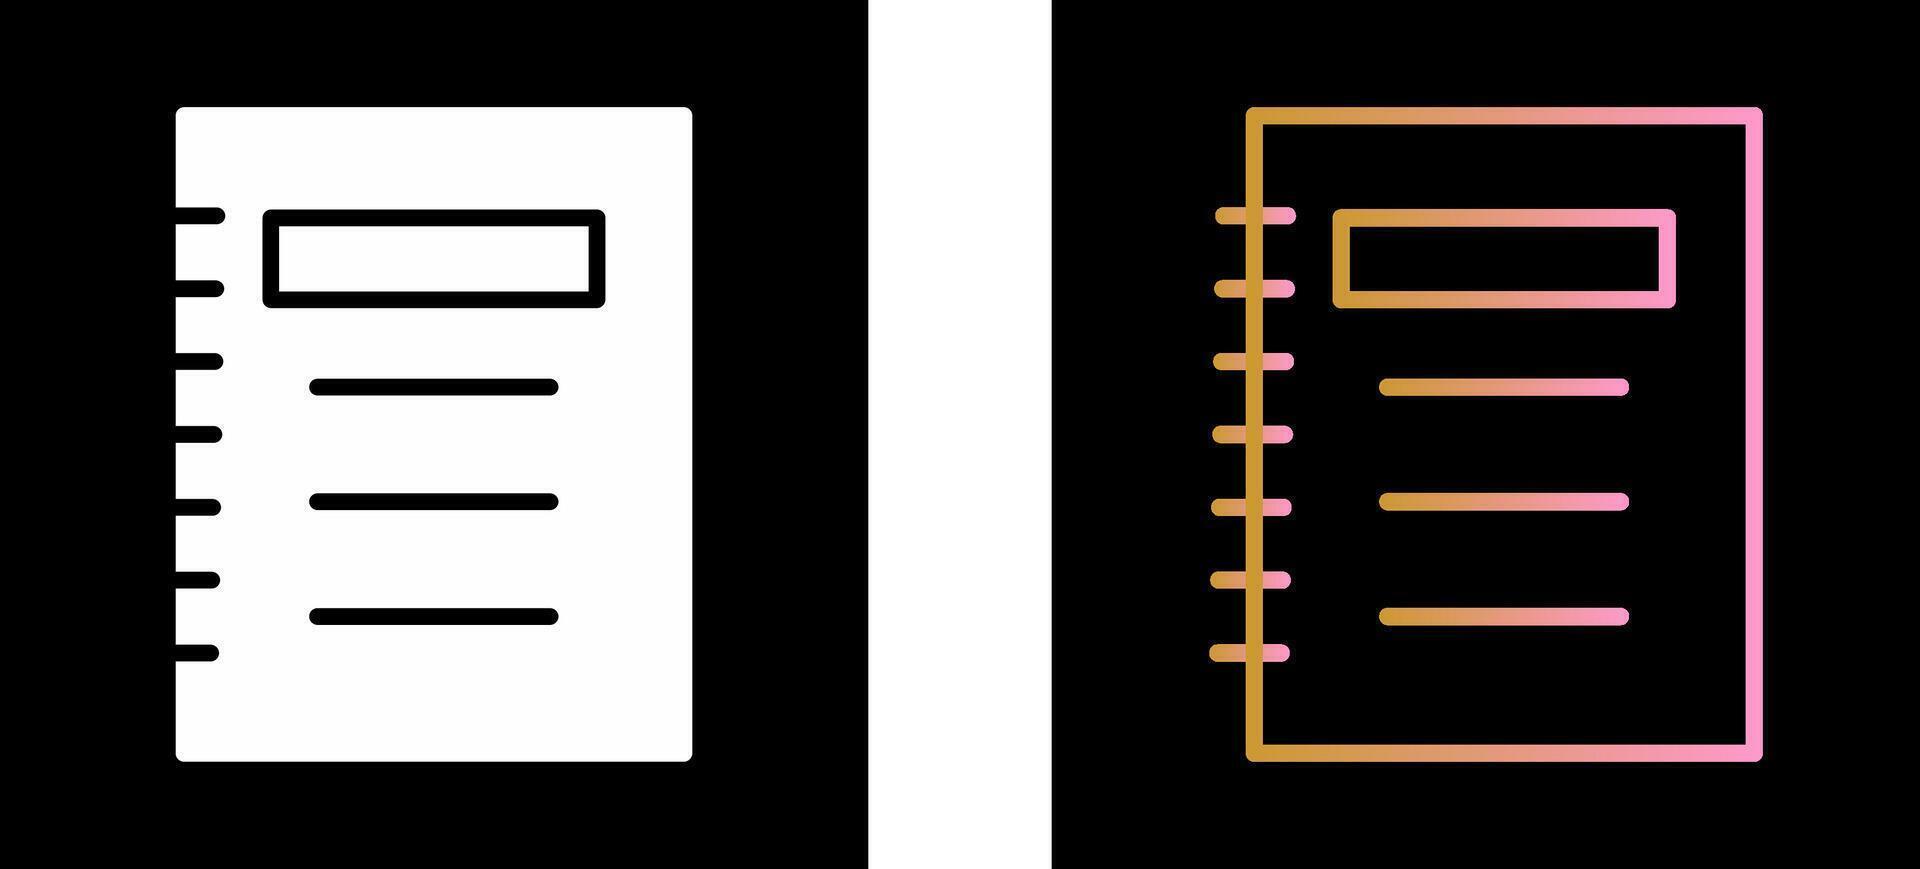 Notepad Icon Design vector